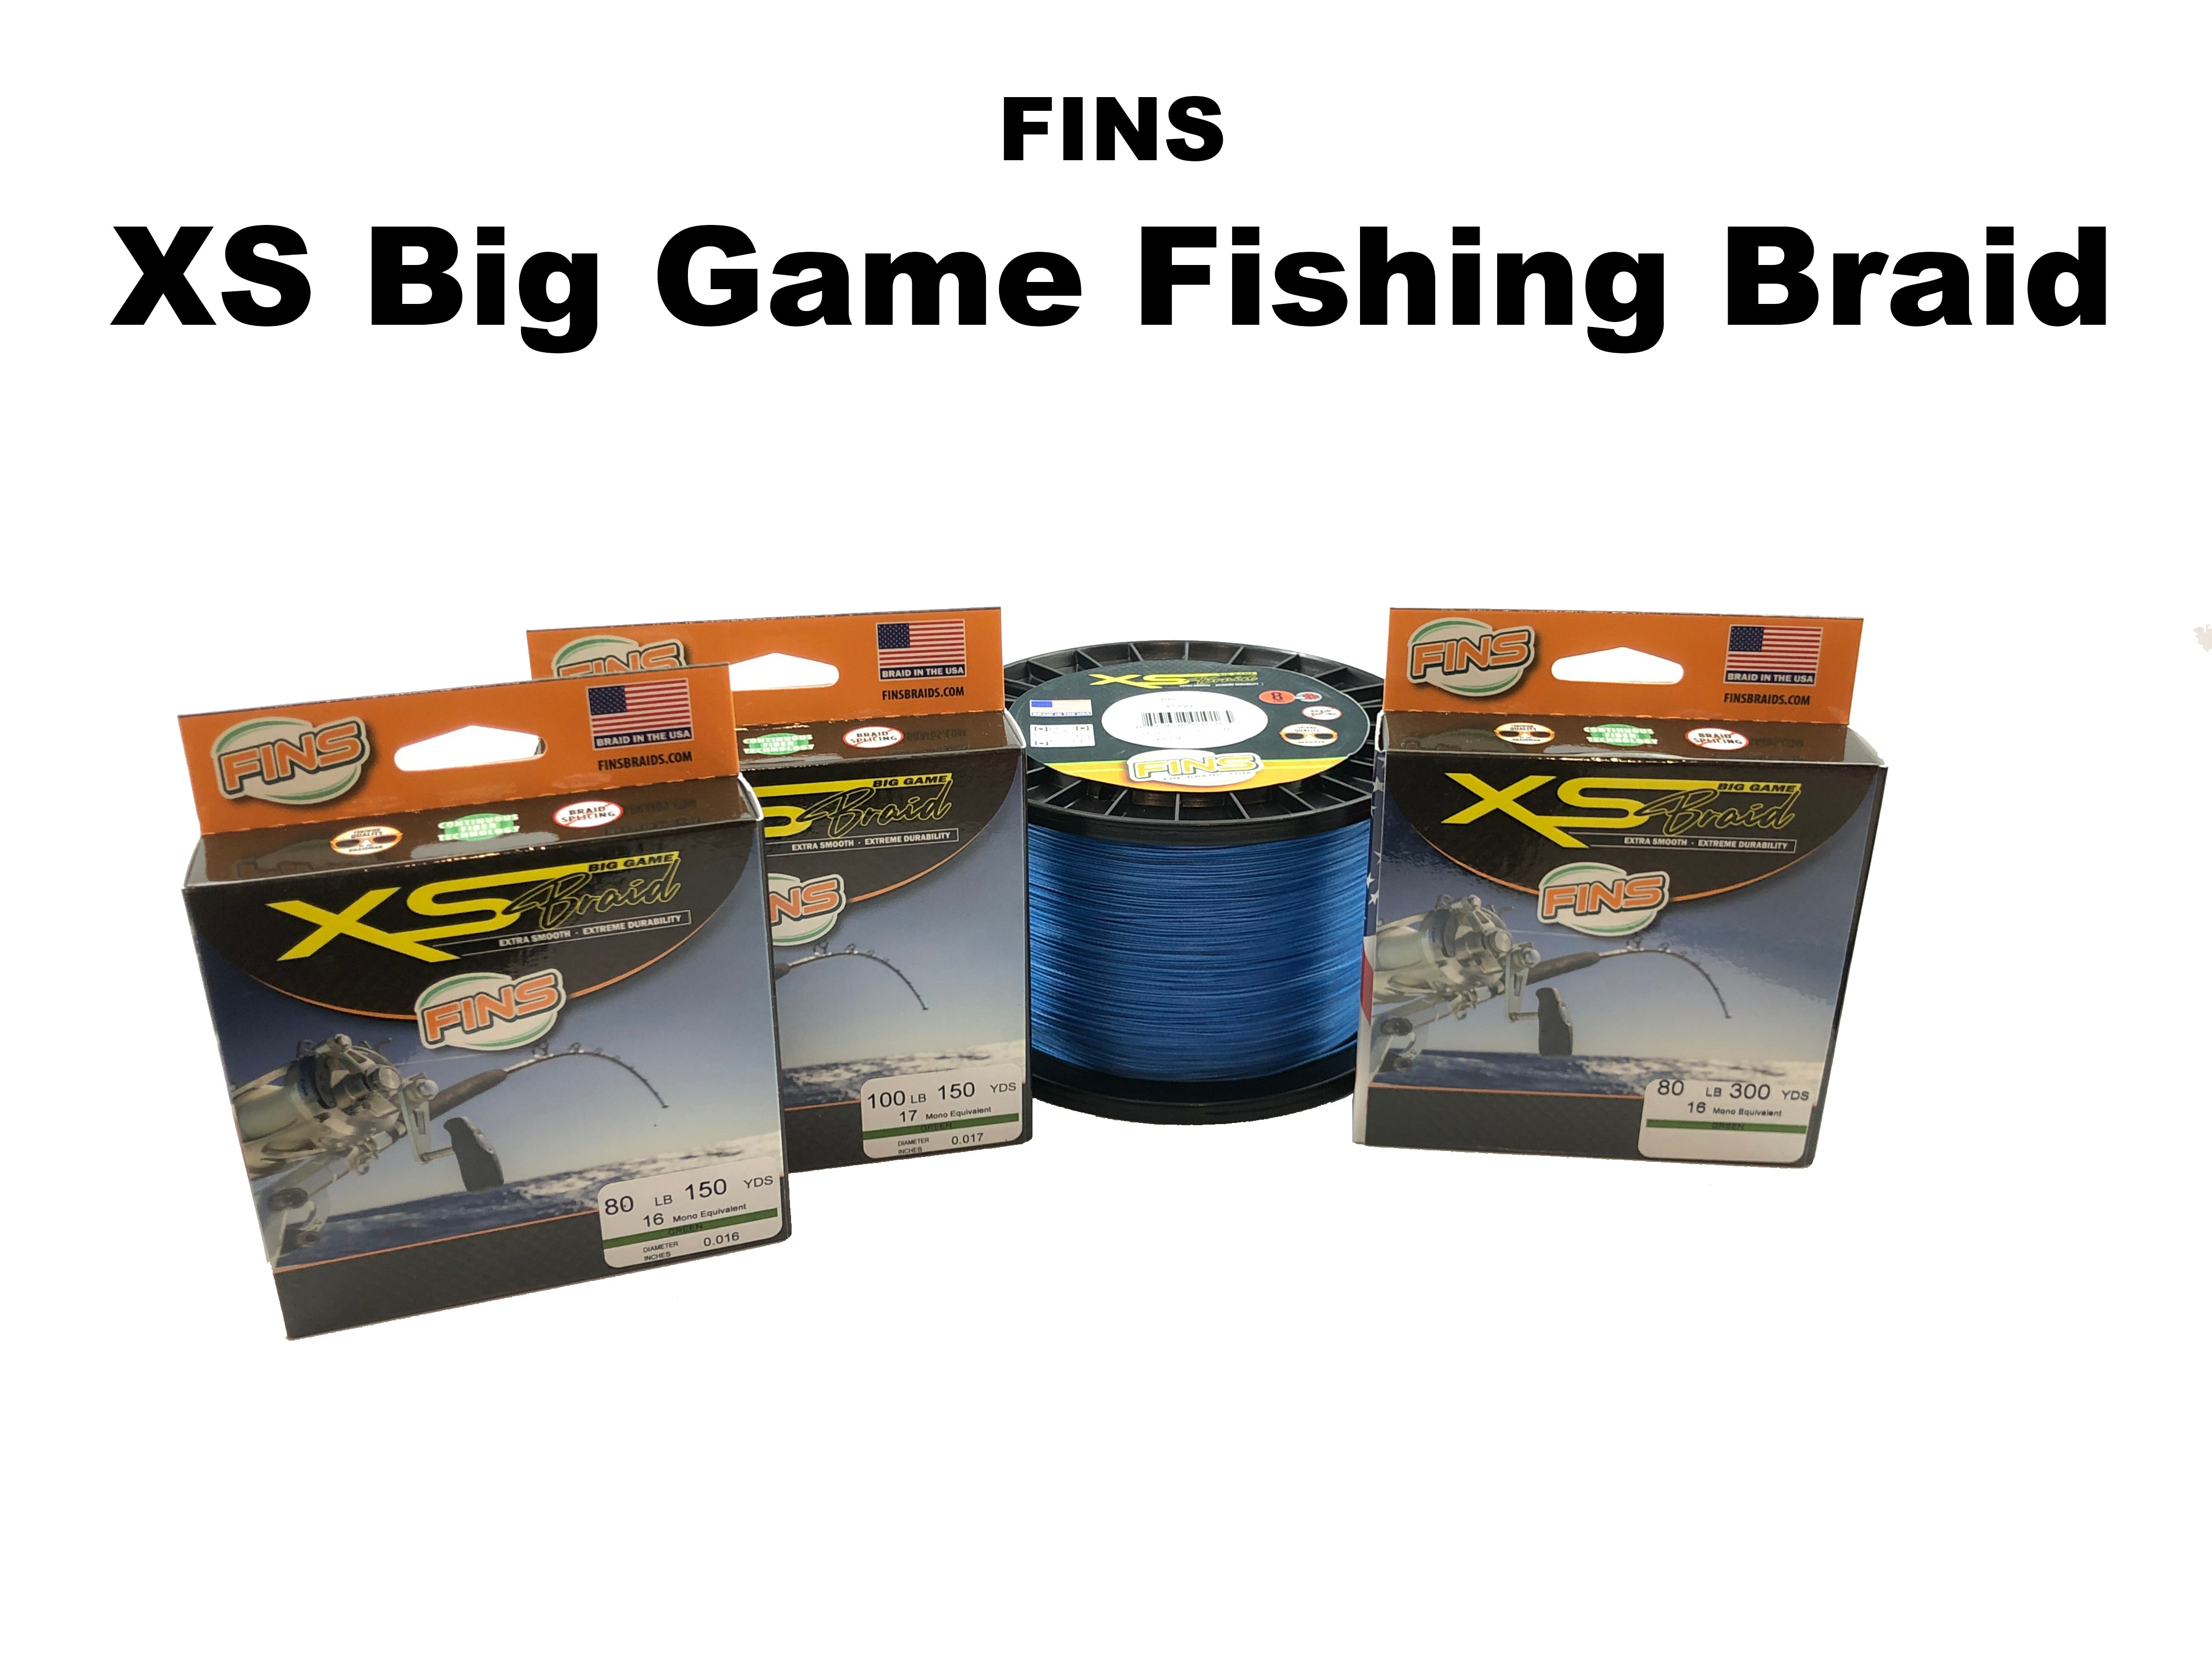 Fins 40G Fishing Braid, Size: 300 Yards, Green